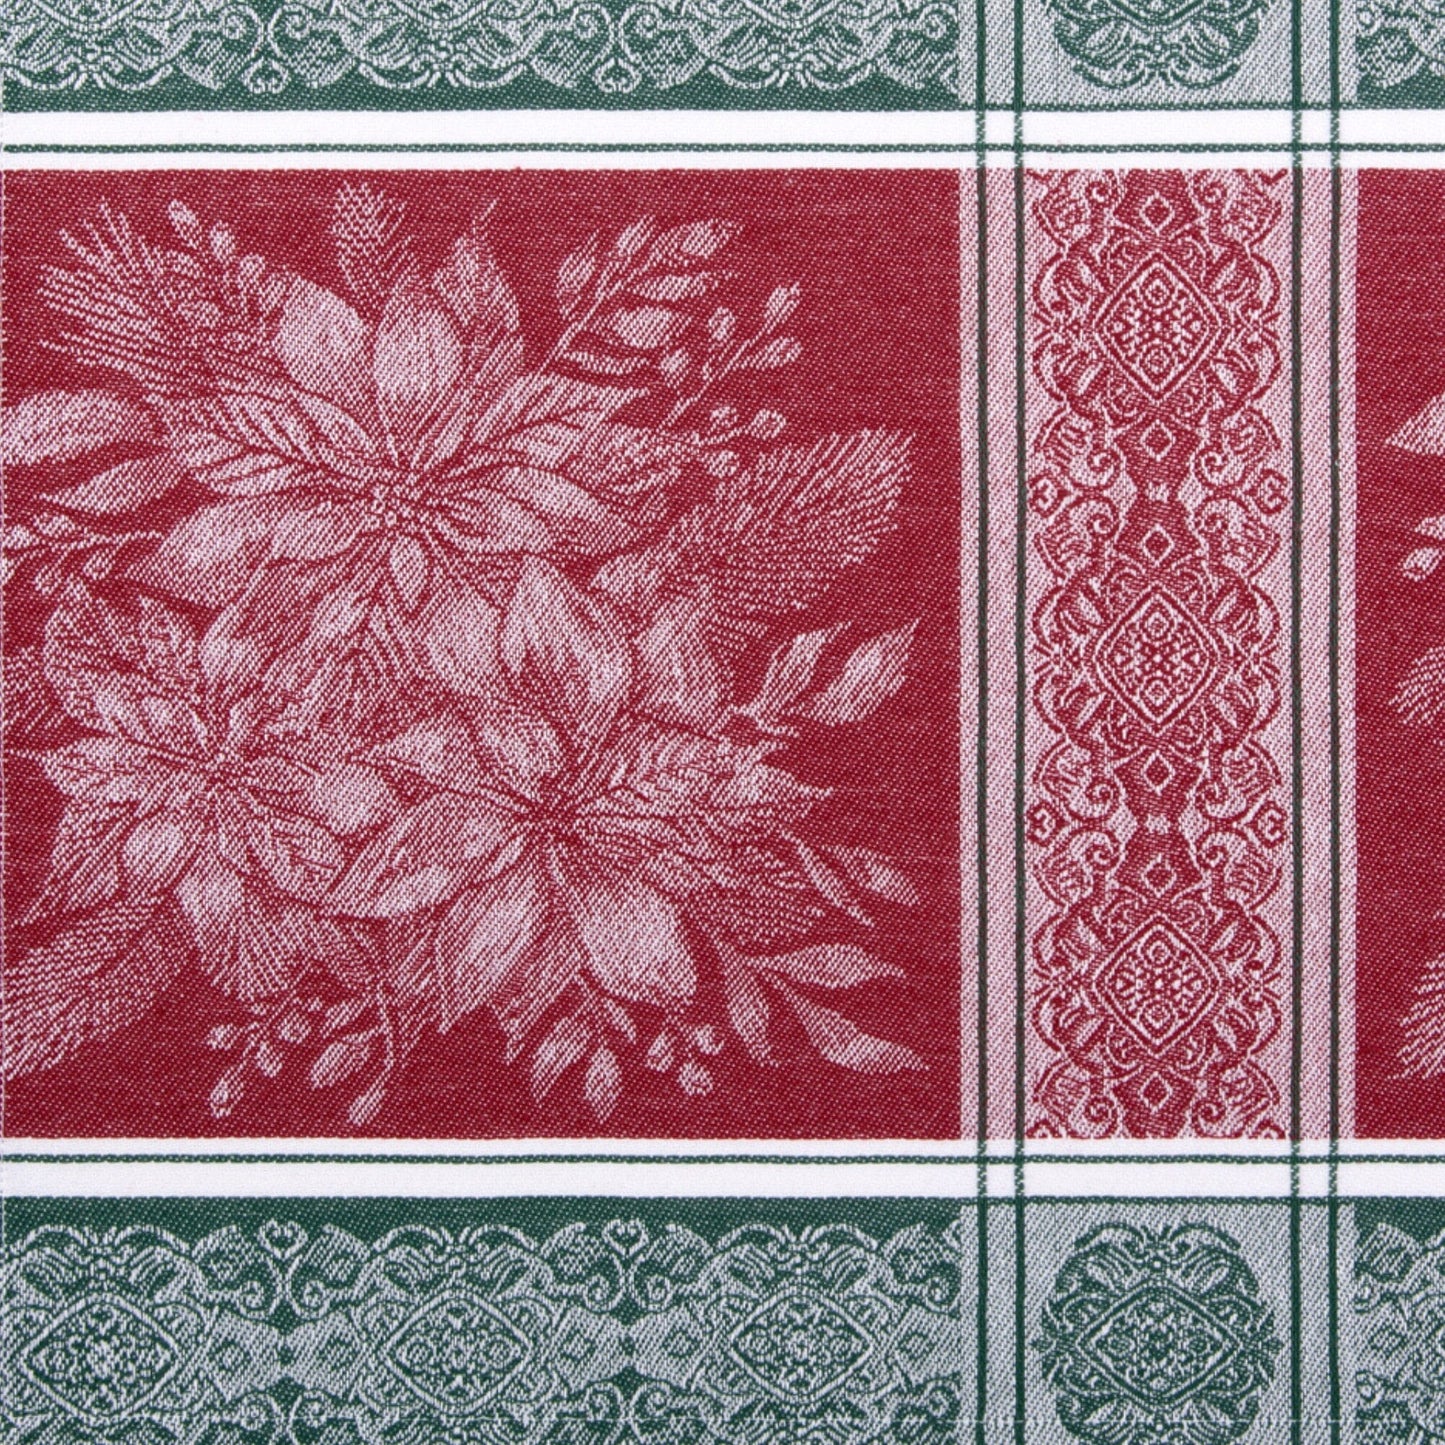 Poinsettia Plaid Jacquard Tablecloth